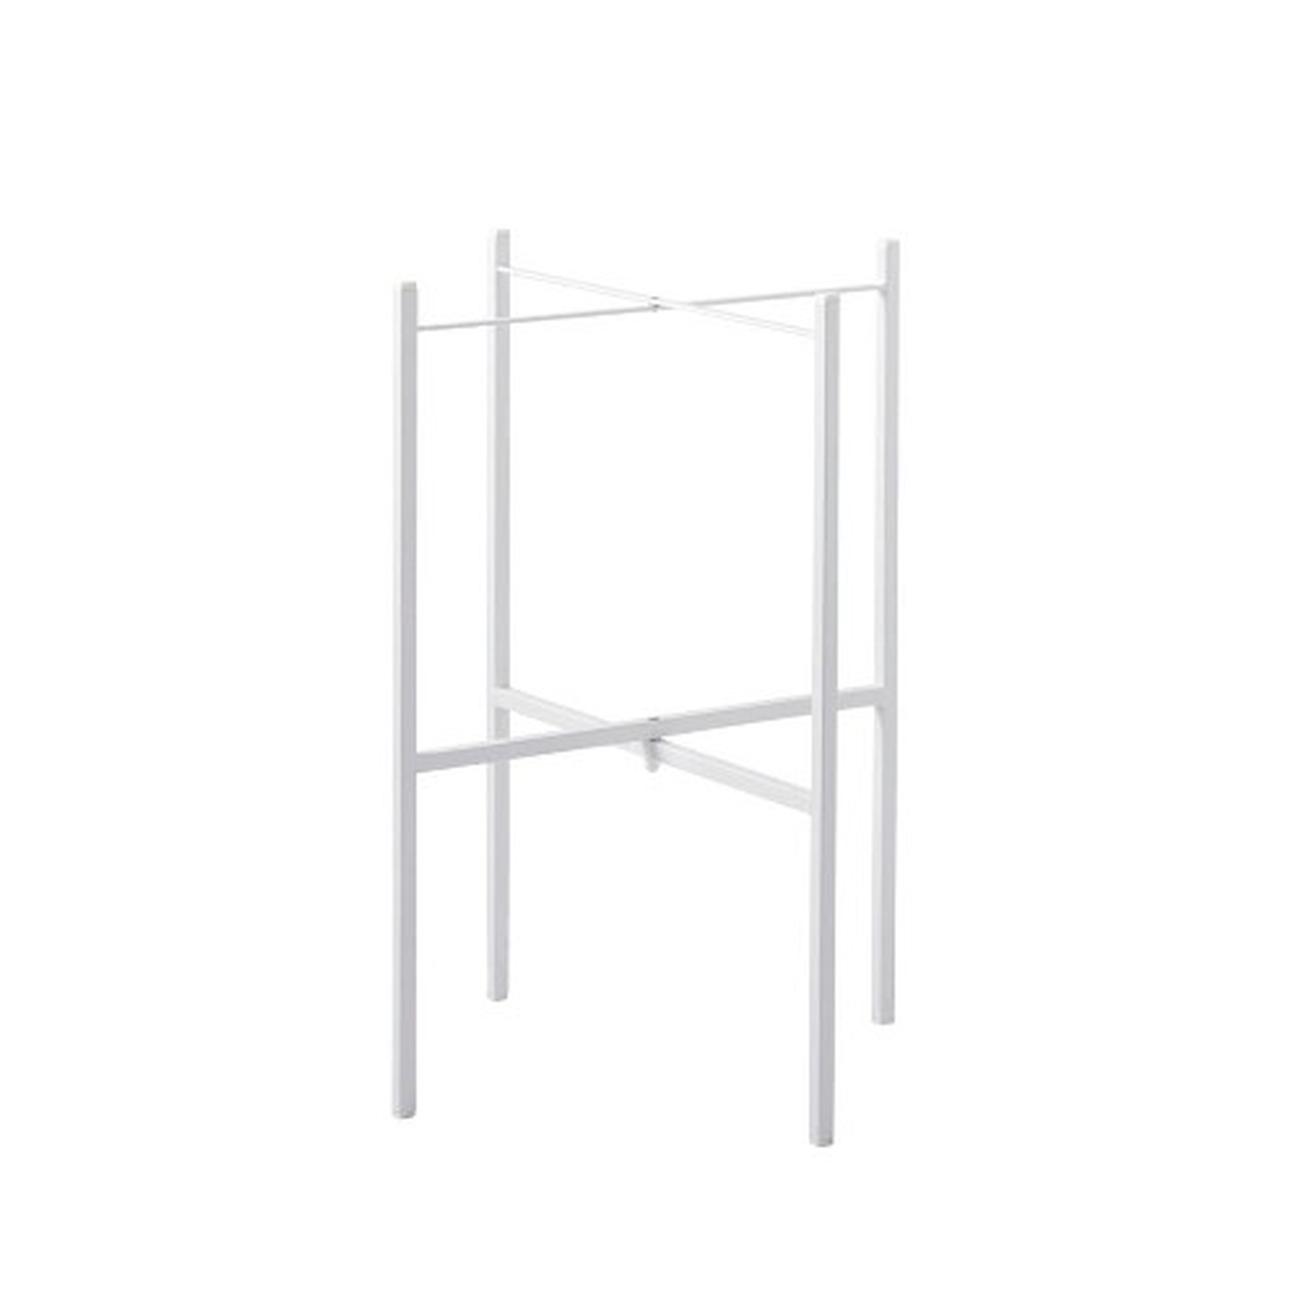 jamida-tray-table-white-stand-39cm-trays - Jamida Tray Table Stand White for 39cm Trays